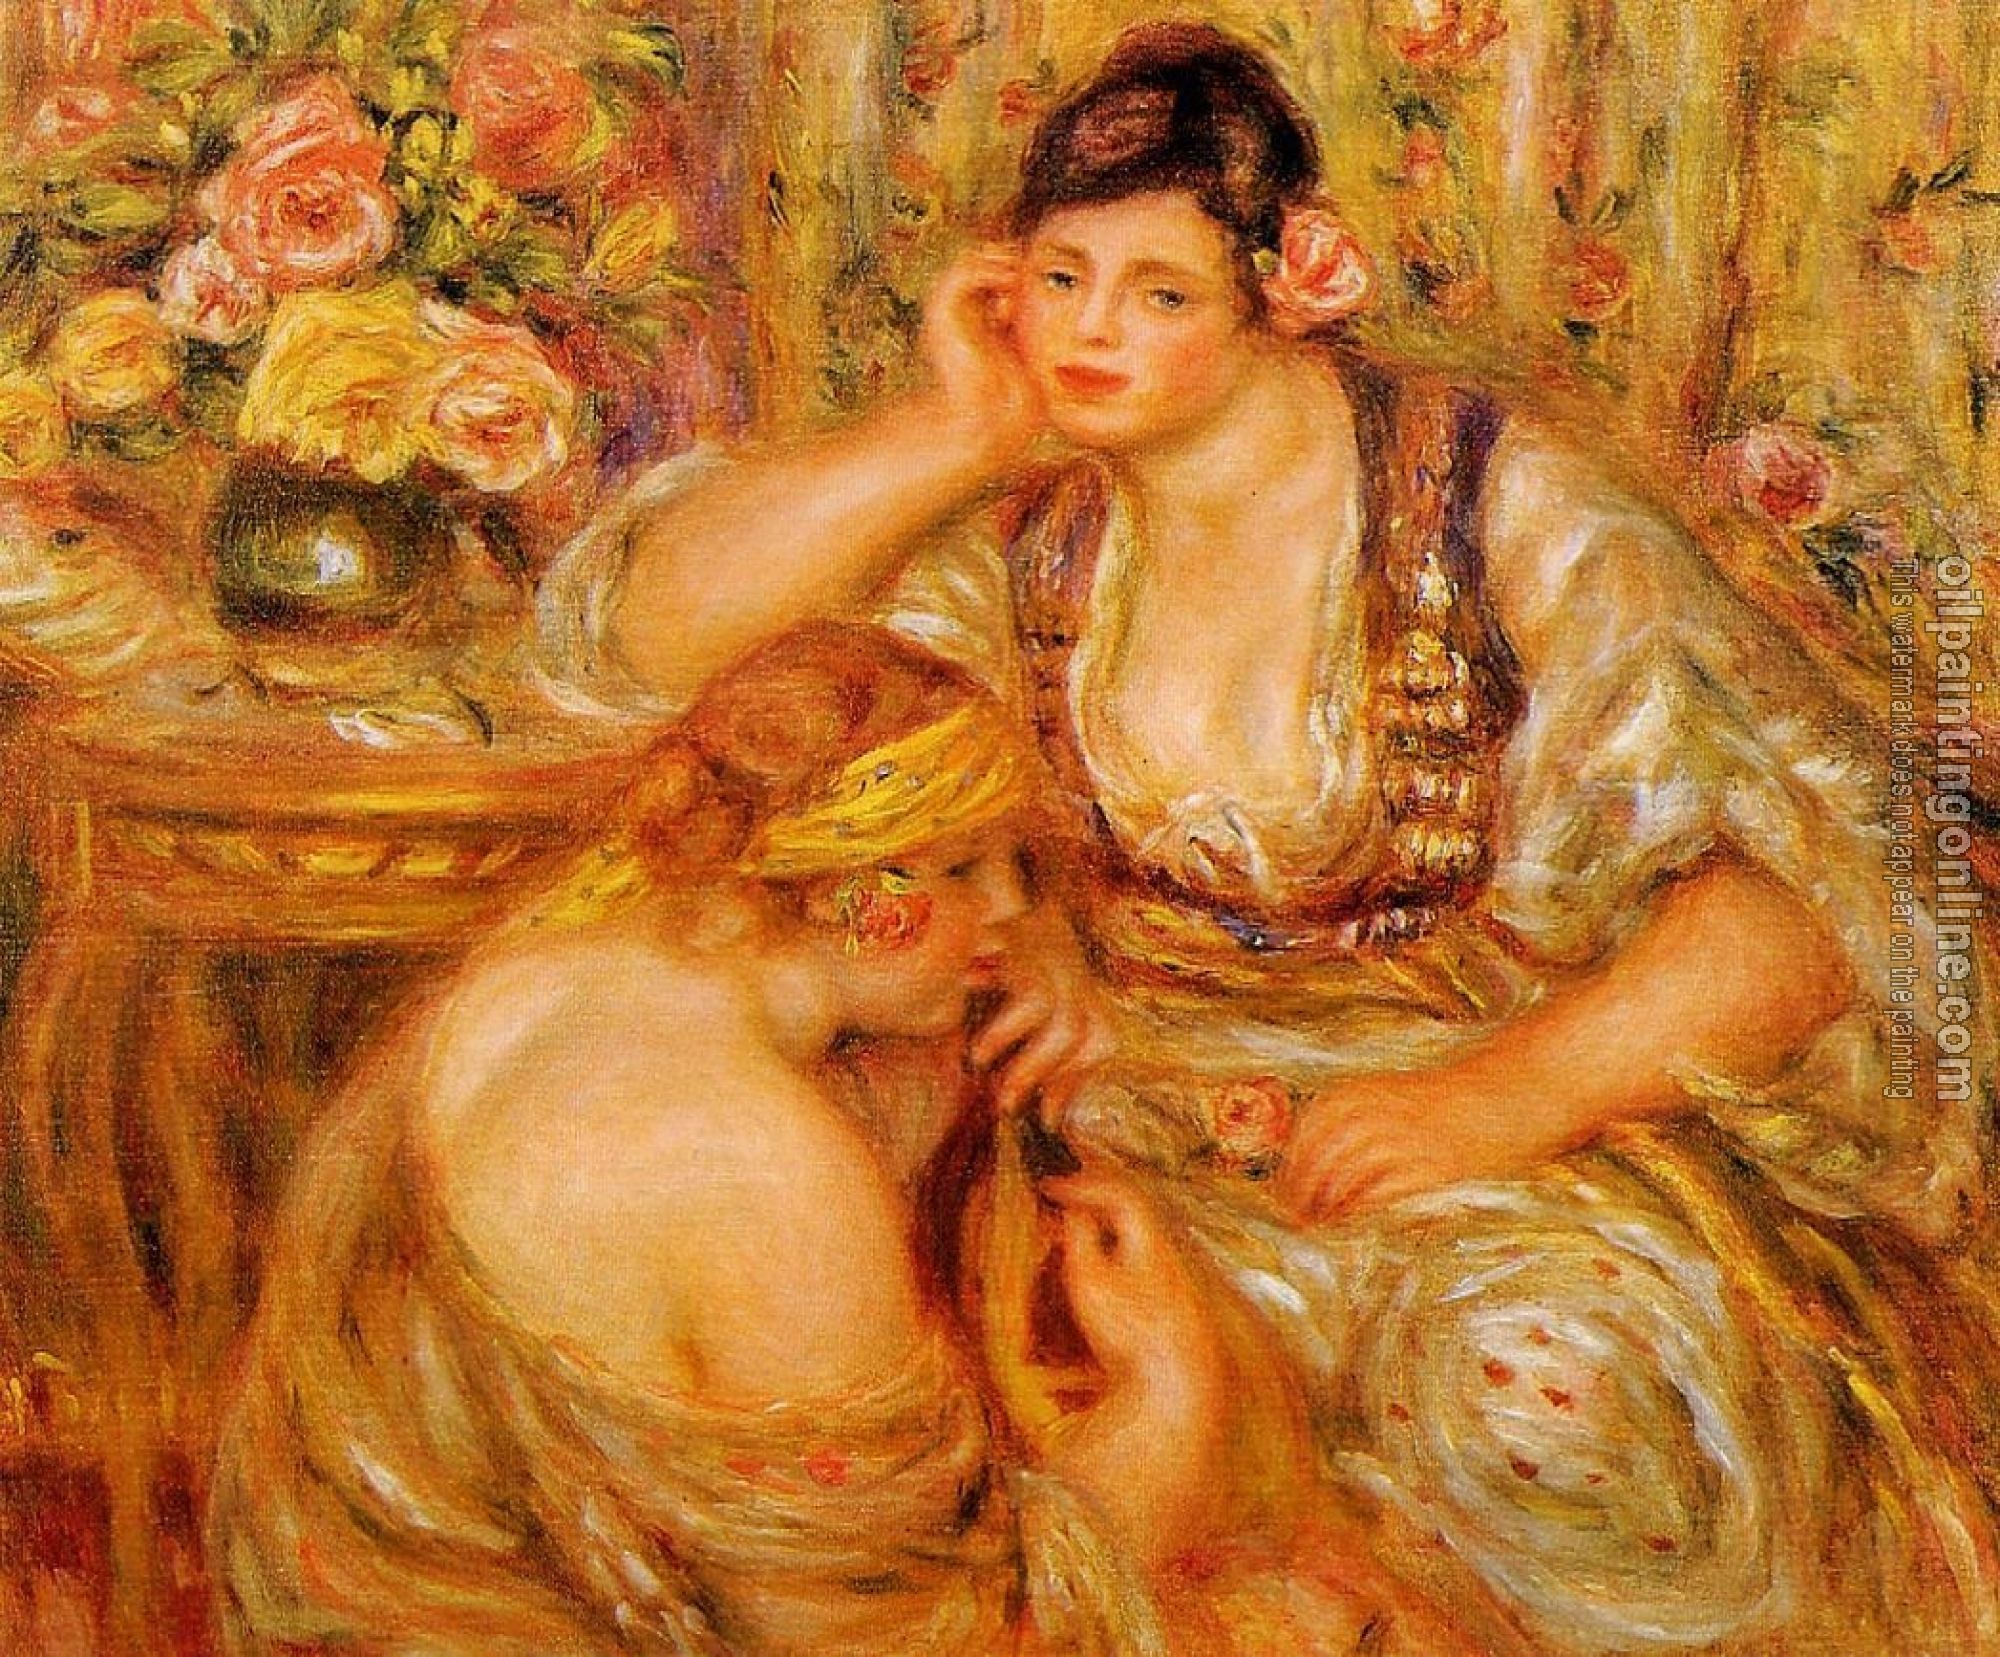 Renoir, Pierre Auguste - The Agreement